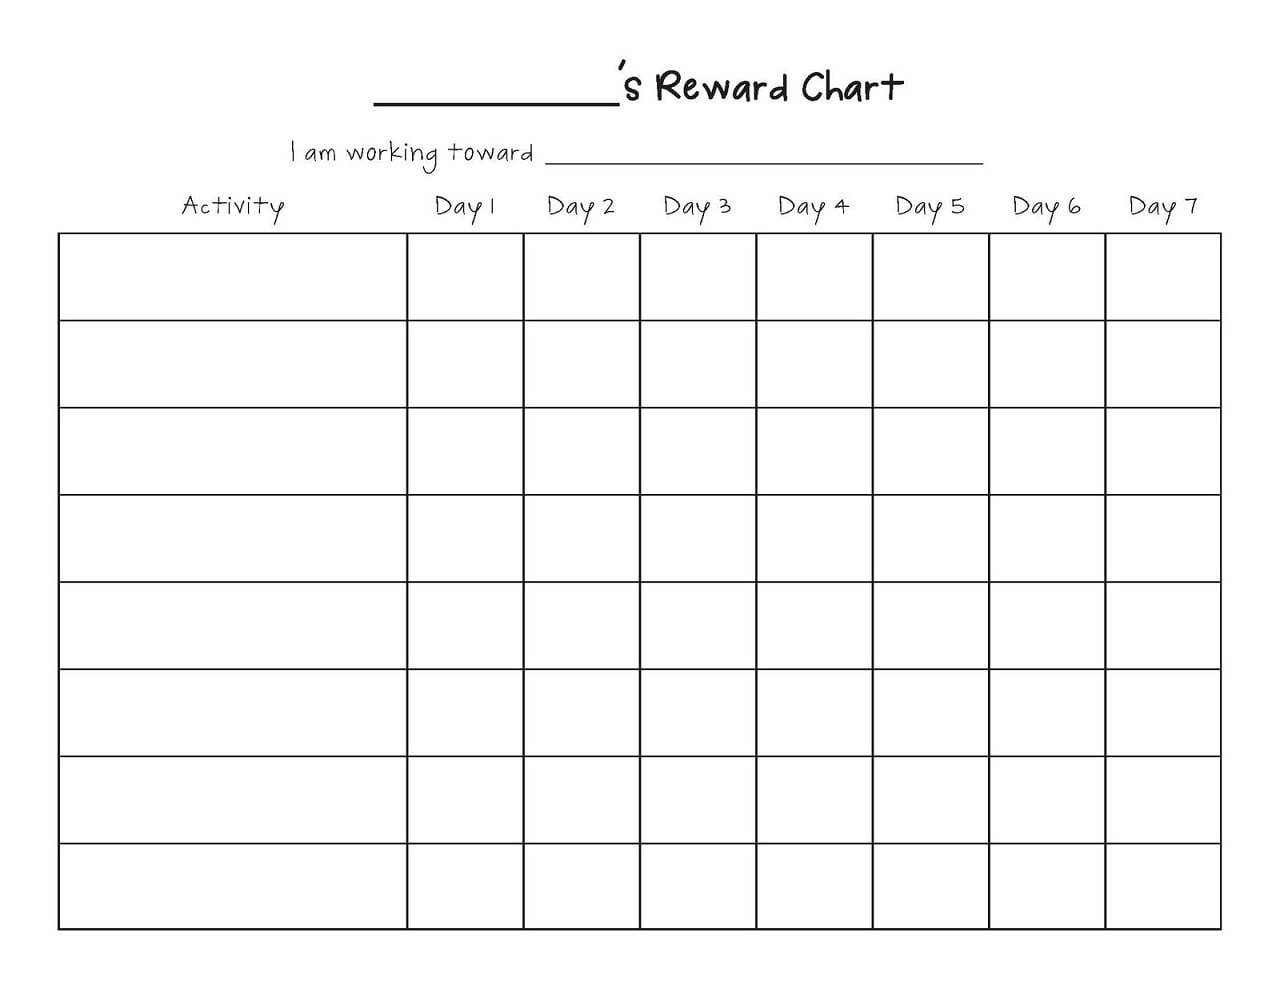 Reward Chart Templates  Word Excel Fomats within Reward Chart Template Word